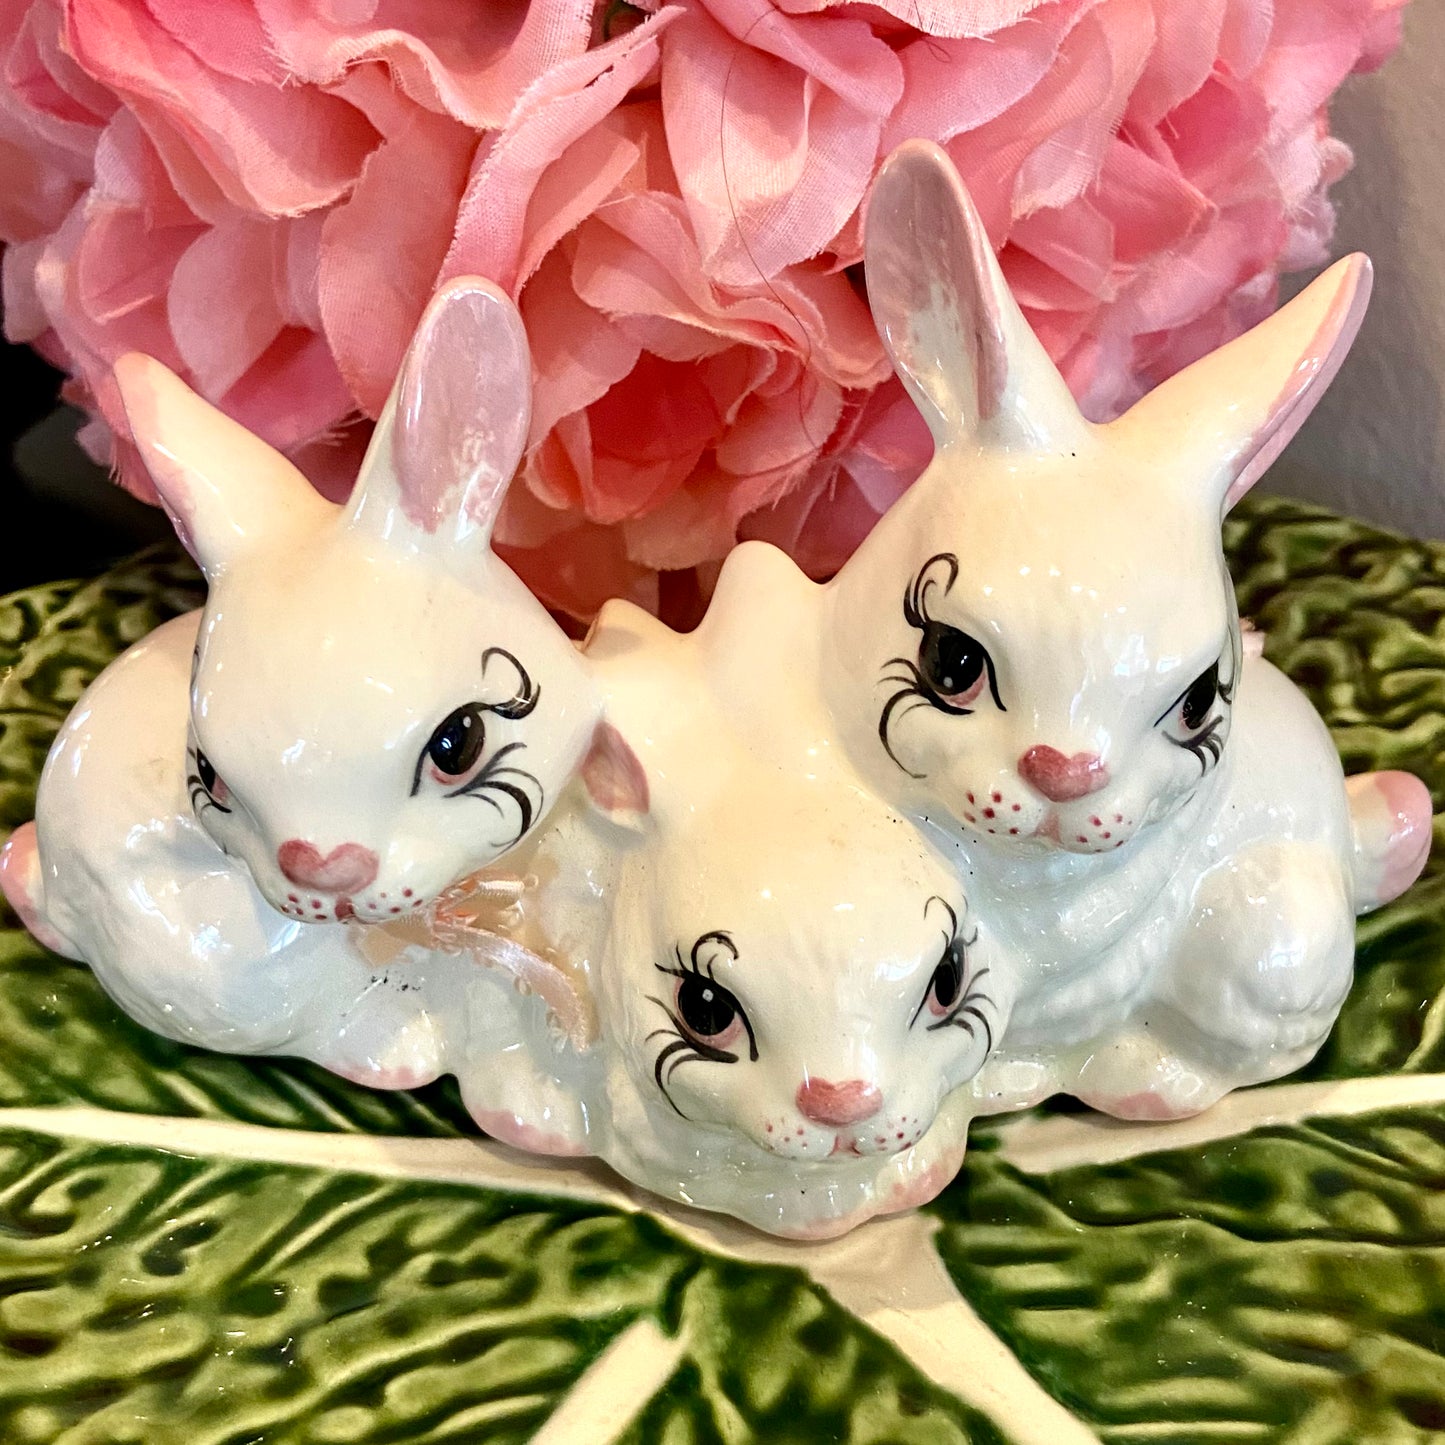 Three lil bunnies pink & white figures